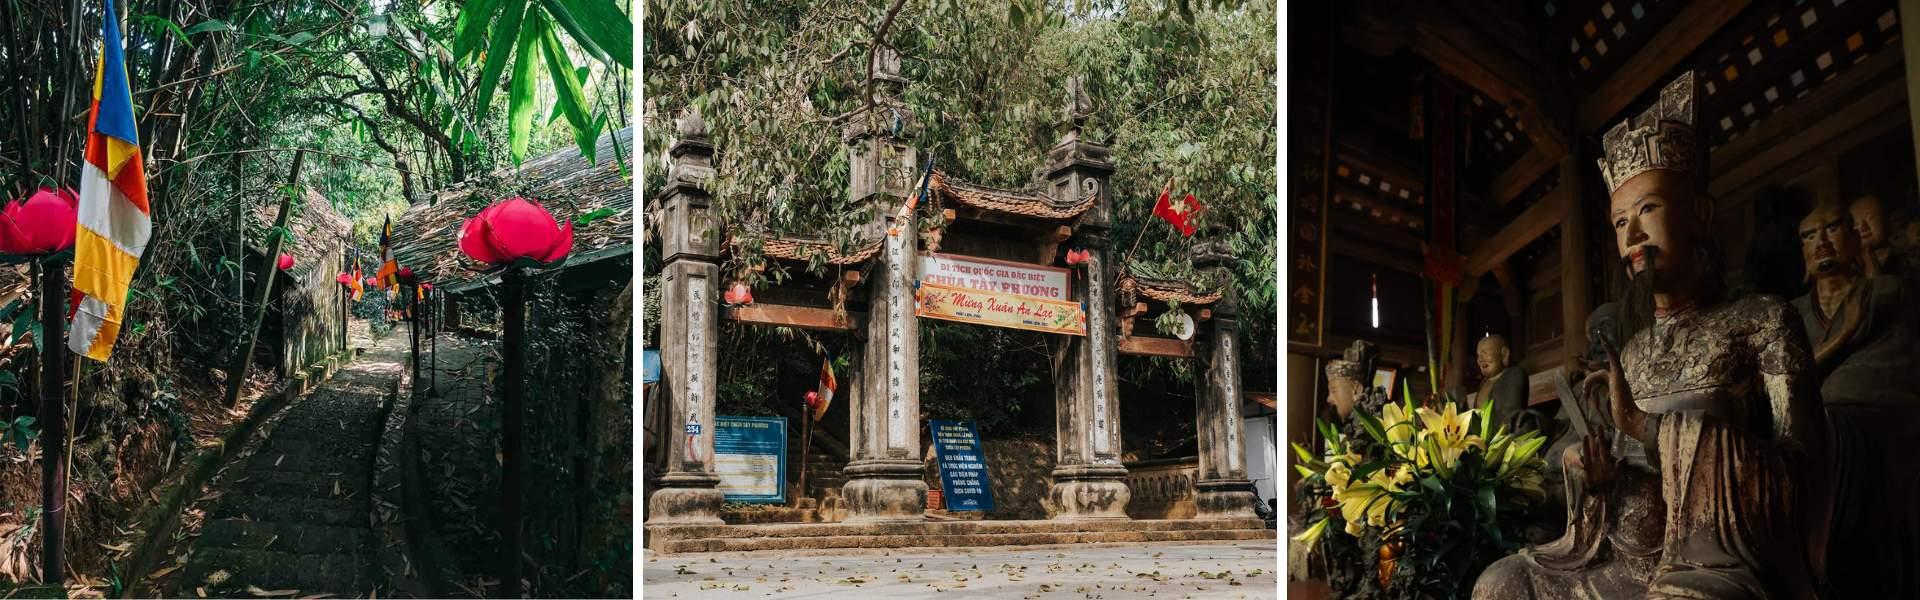 La pagode Tay Phuong près de Hanoi